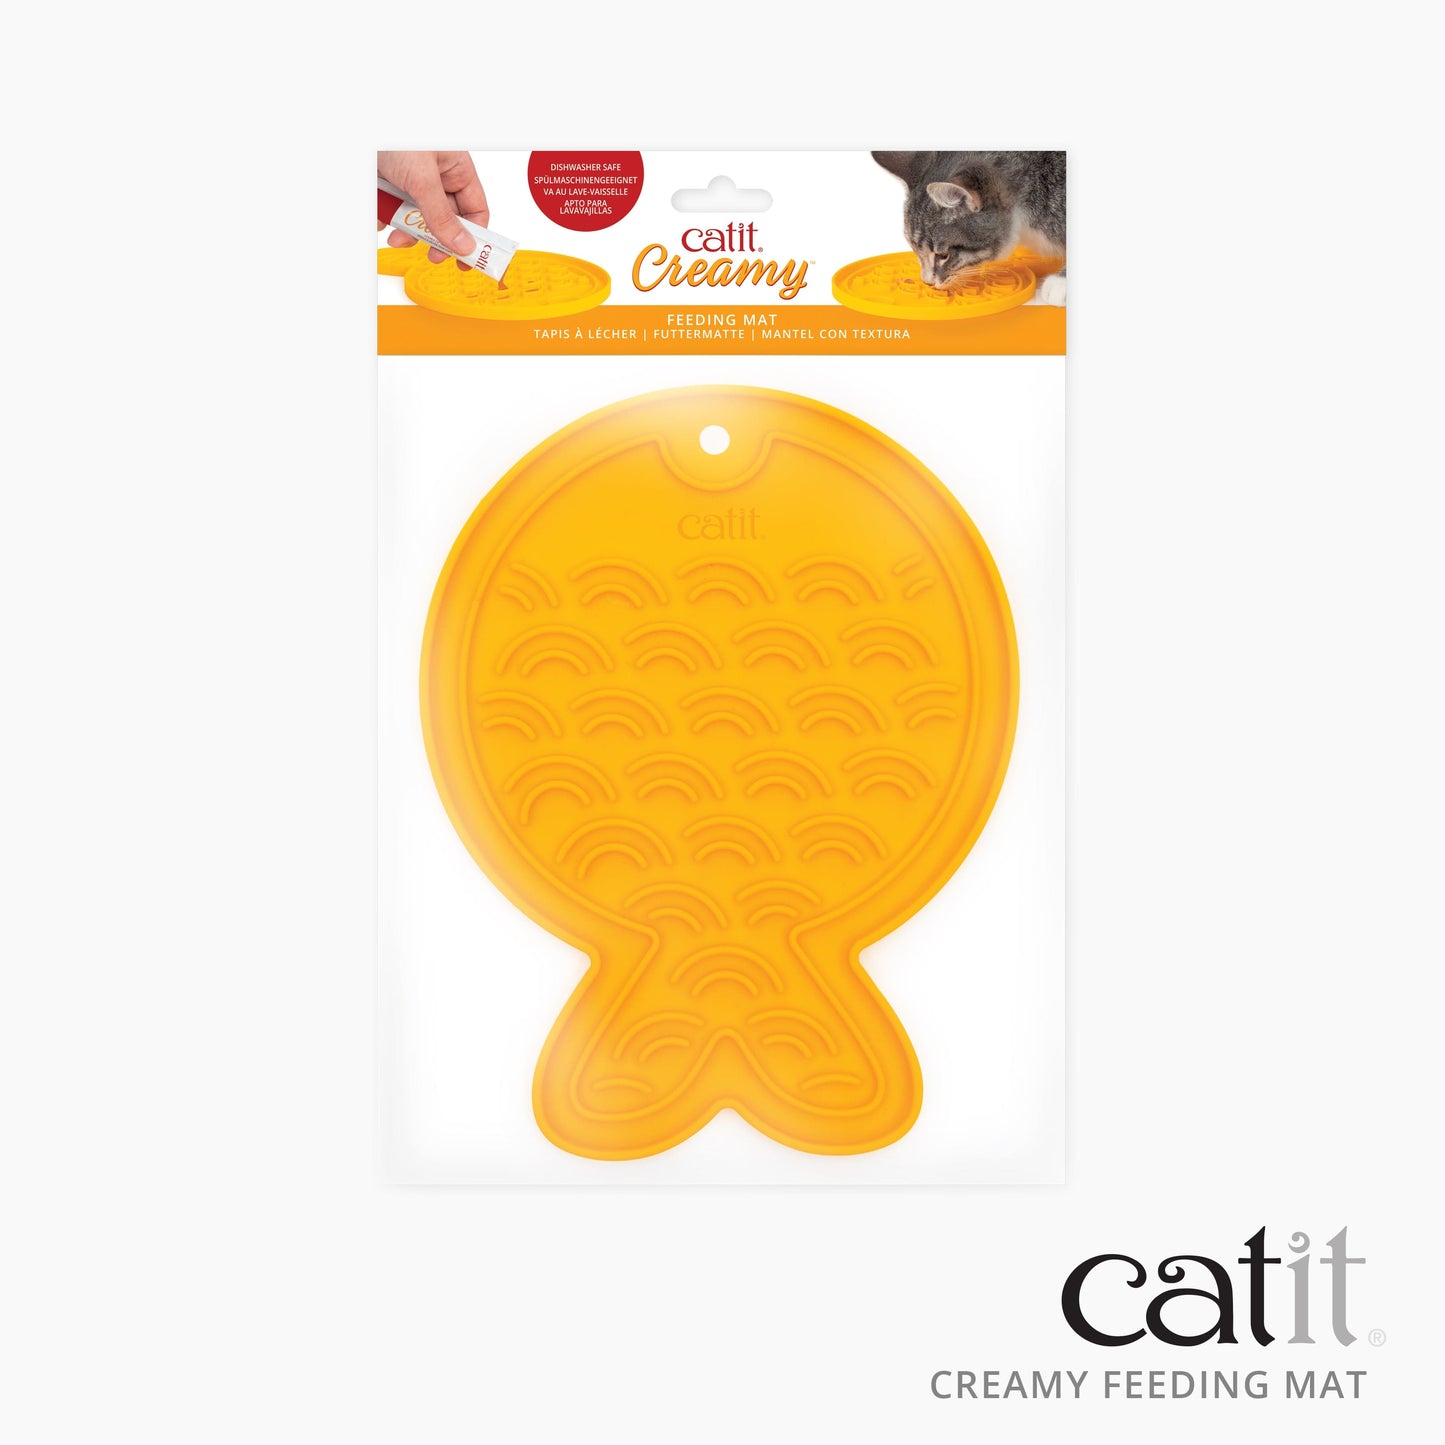 Catit Creamy Feeding Mat